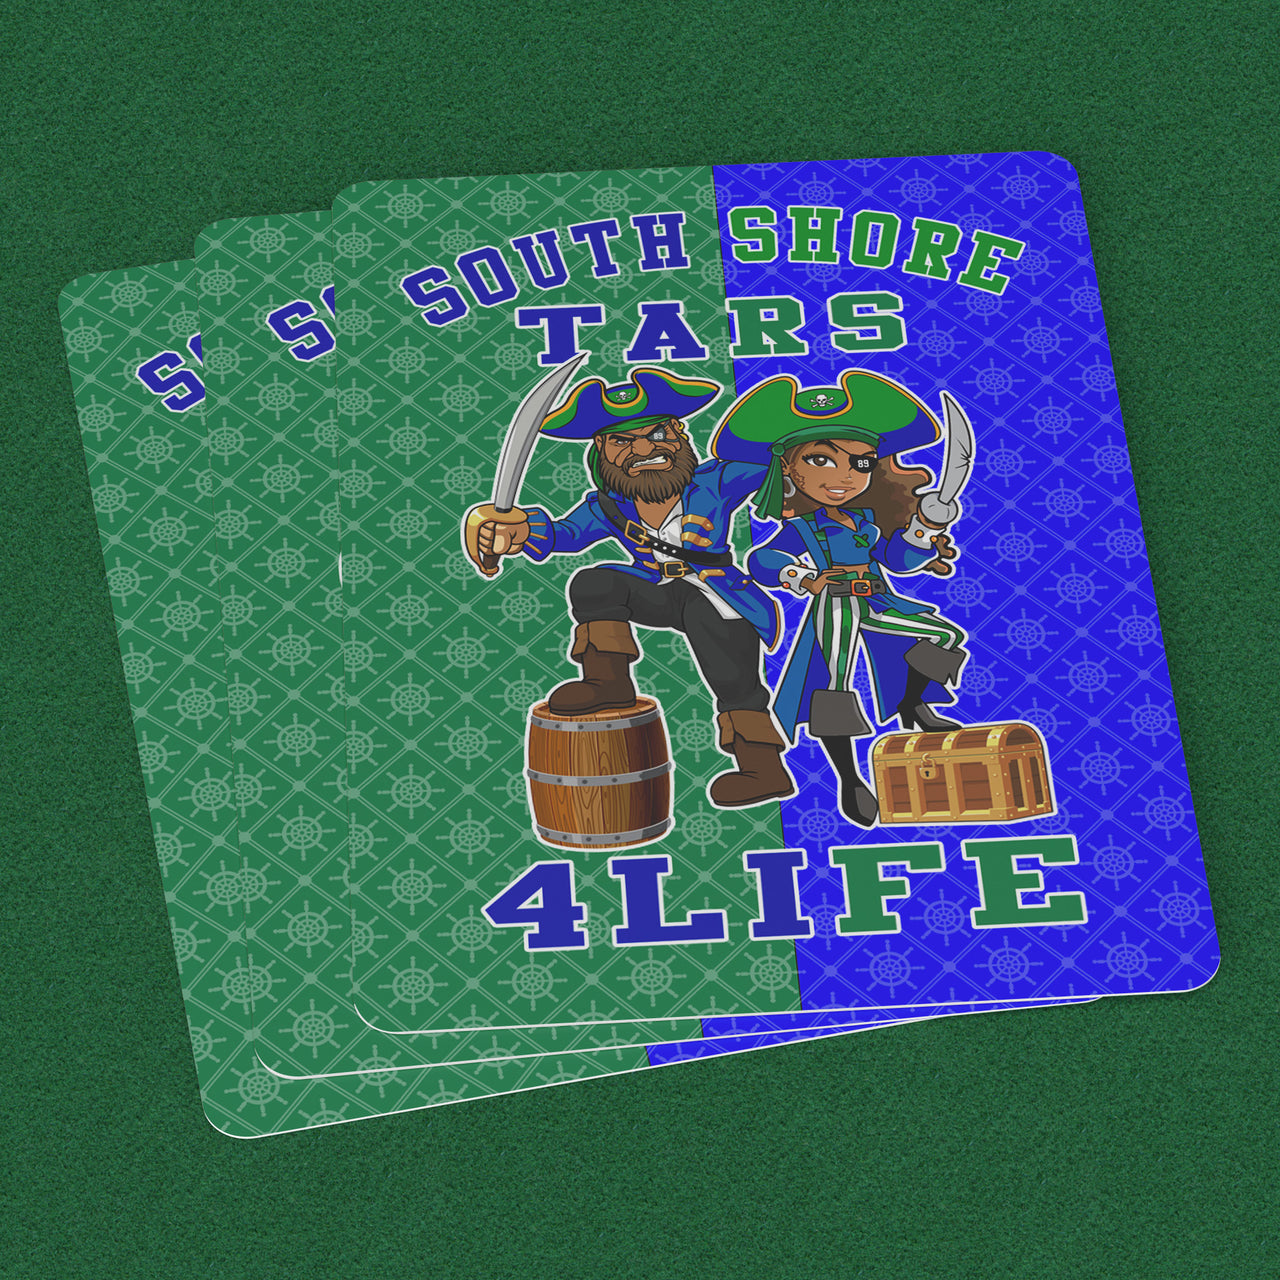 SOUTH SHORE COUPLE TARS PIRATES Playing Card v2